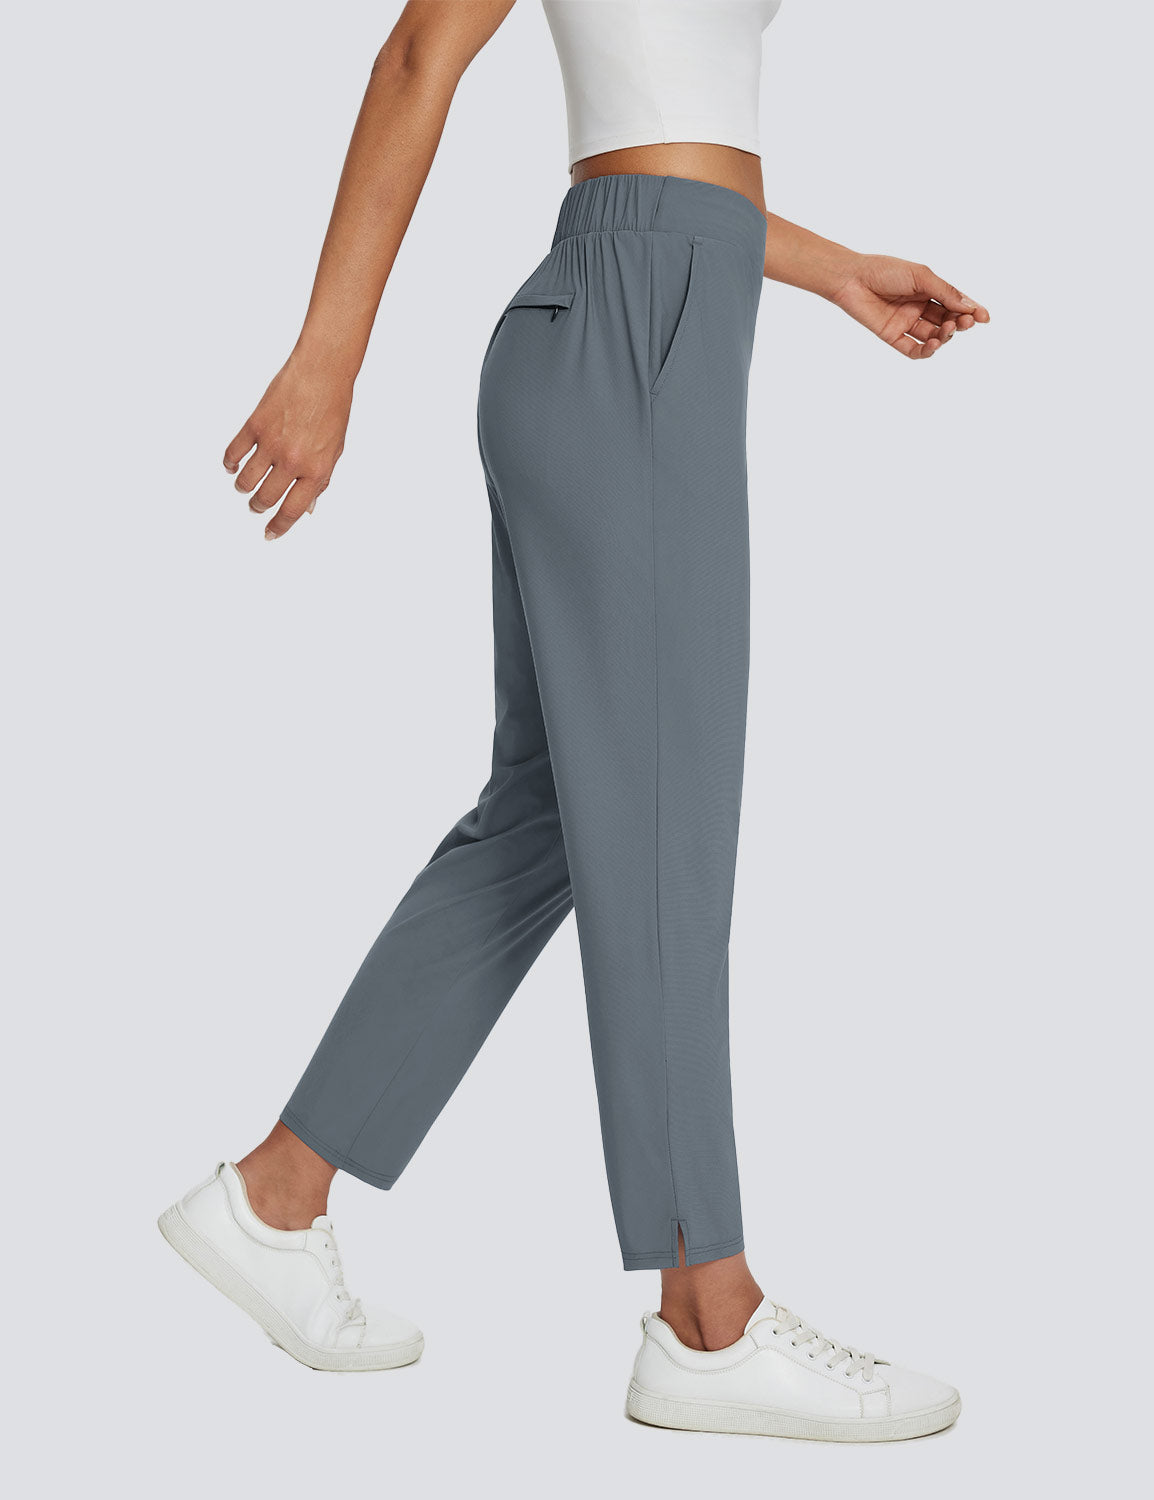 Baleaf Women's Stretchy Ankle-length High-rise Pants Ebony Side